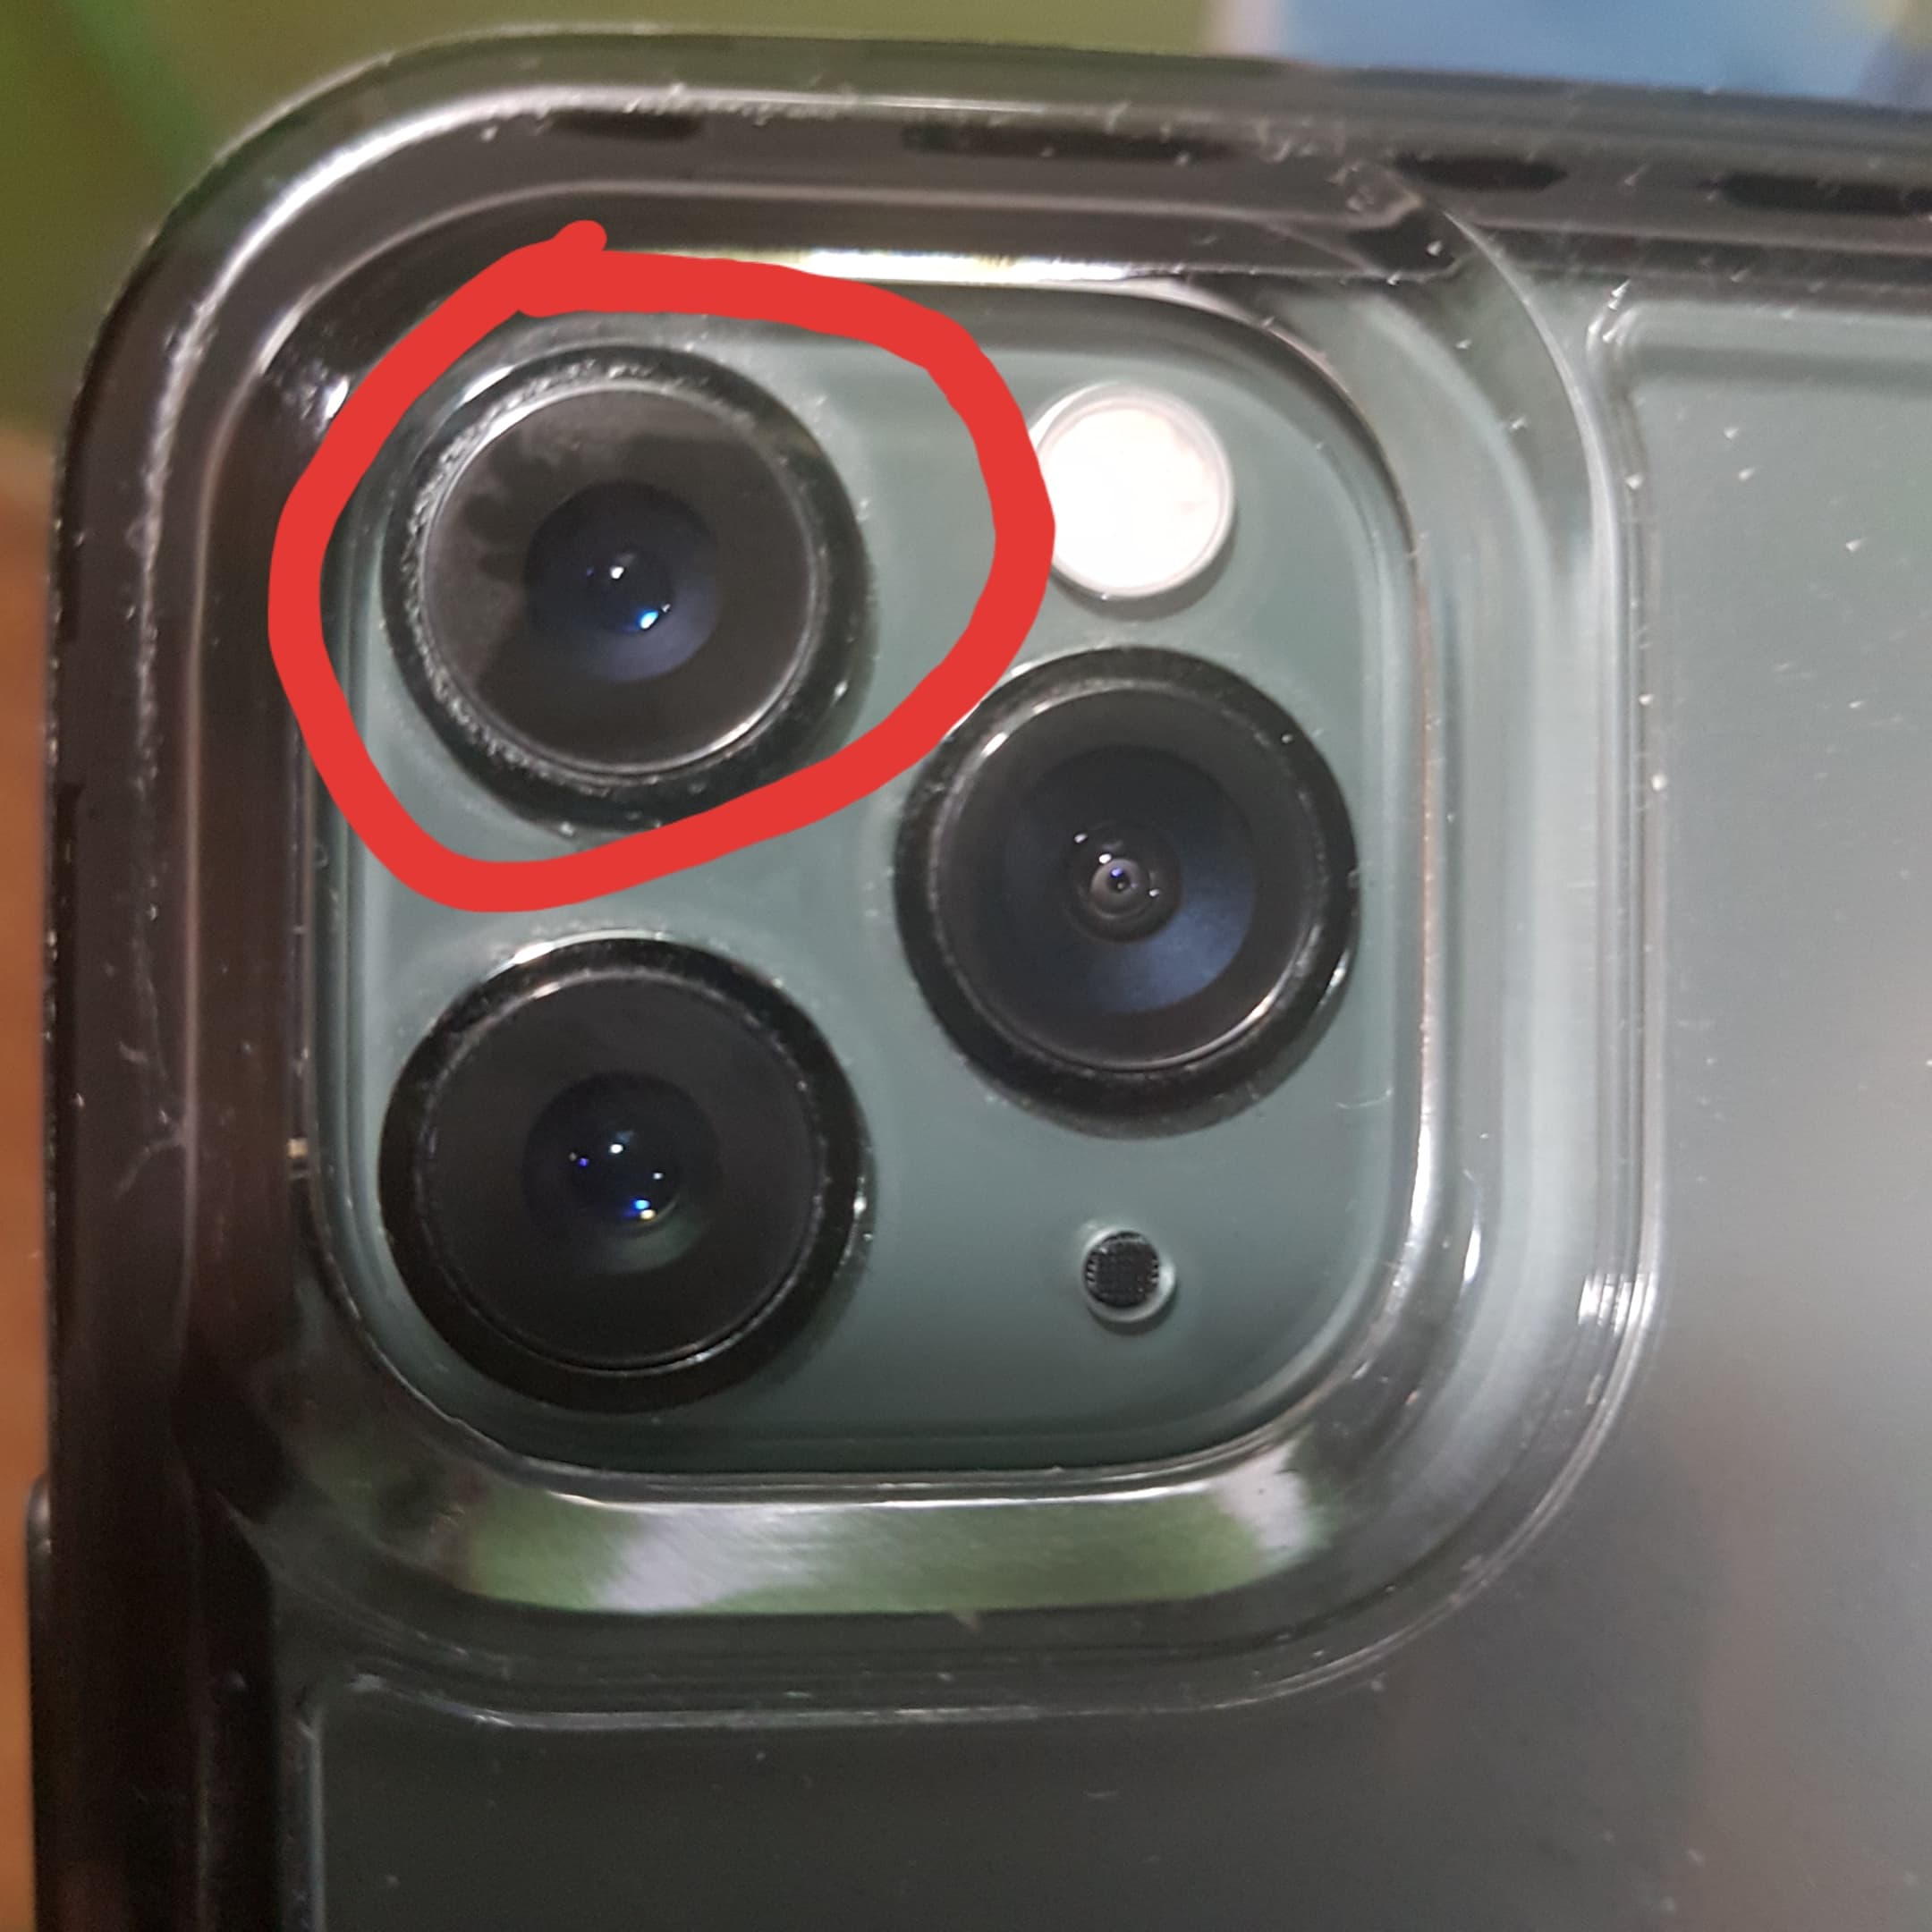 What happens if I scratch my iPhone camera?